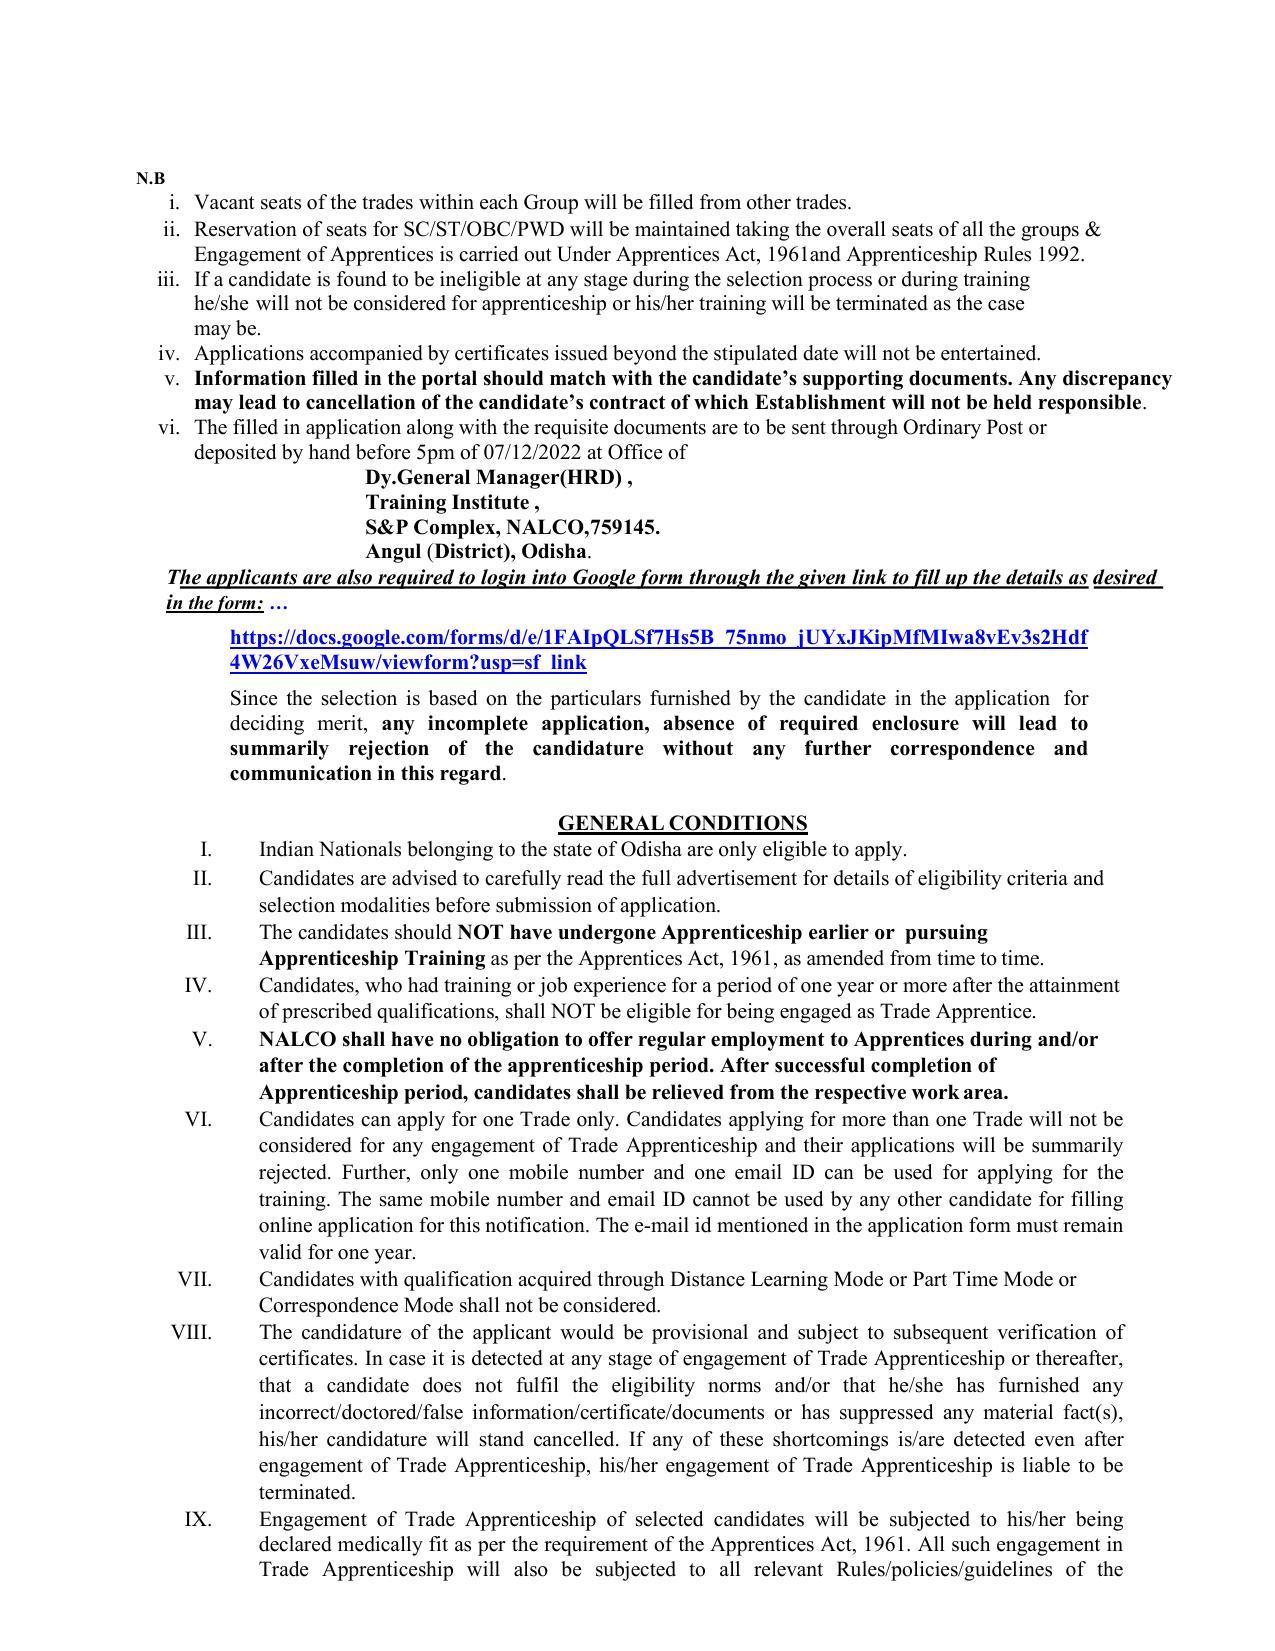 National Aluminium Company Limited (NALCO) Invites Application for Trade Apprentice Recruitment 2022 - Page 1